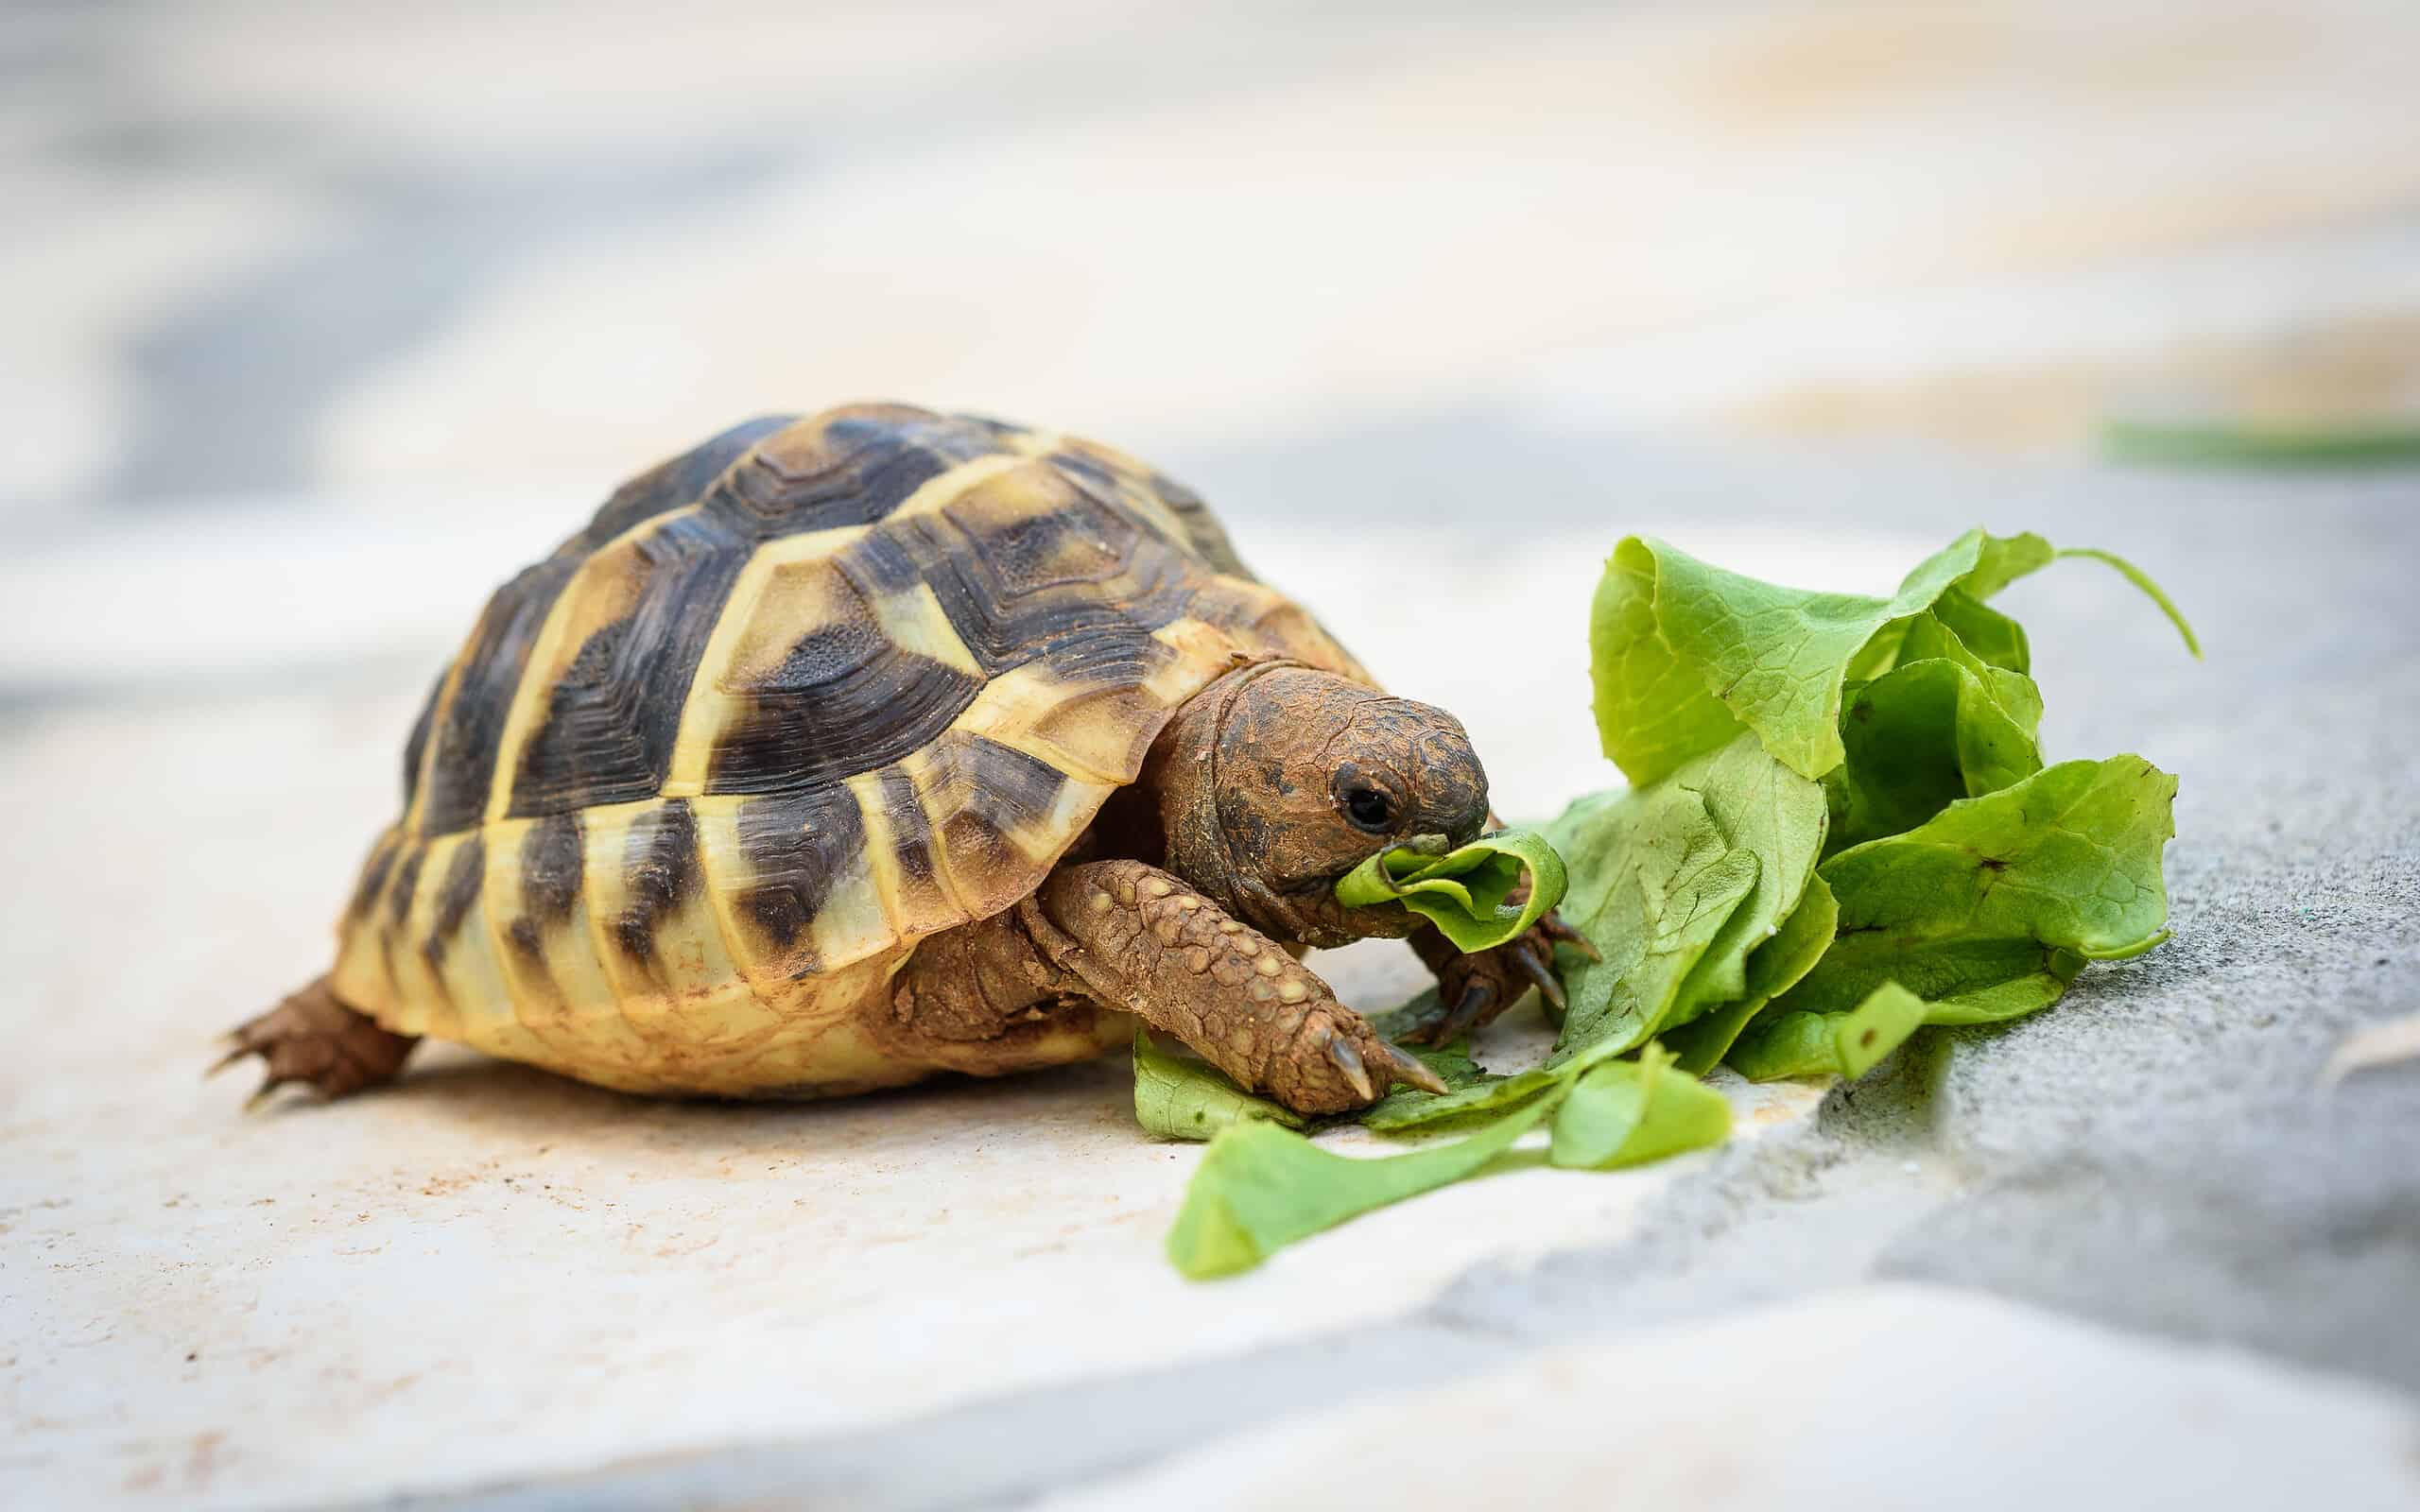 Pet turtle eating lettuce salad on stone paved terrace.